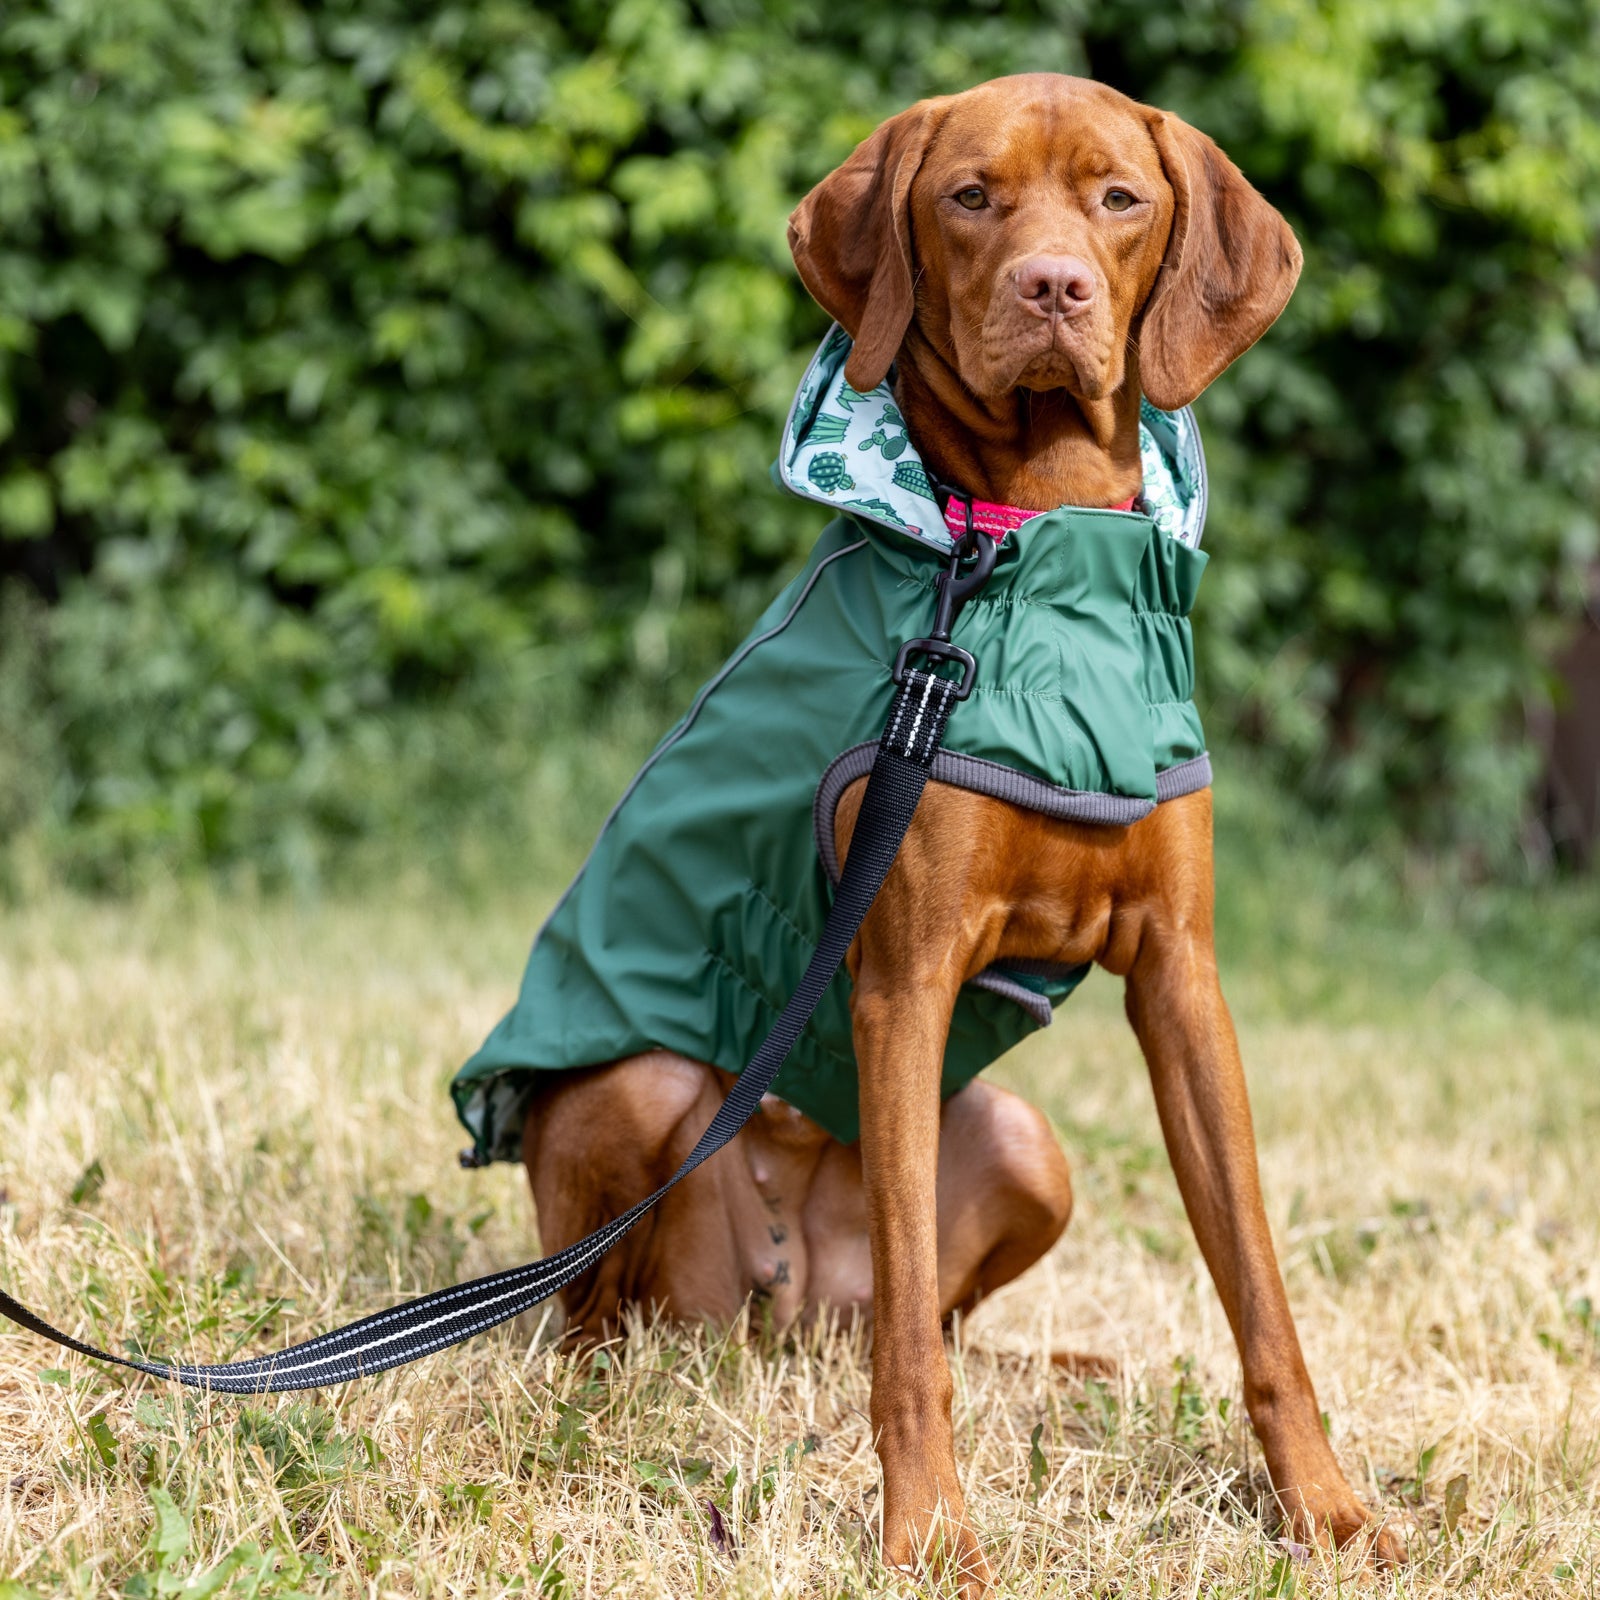 A vizsla  type dog  sitting, wearing a green raincoat